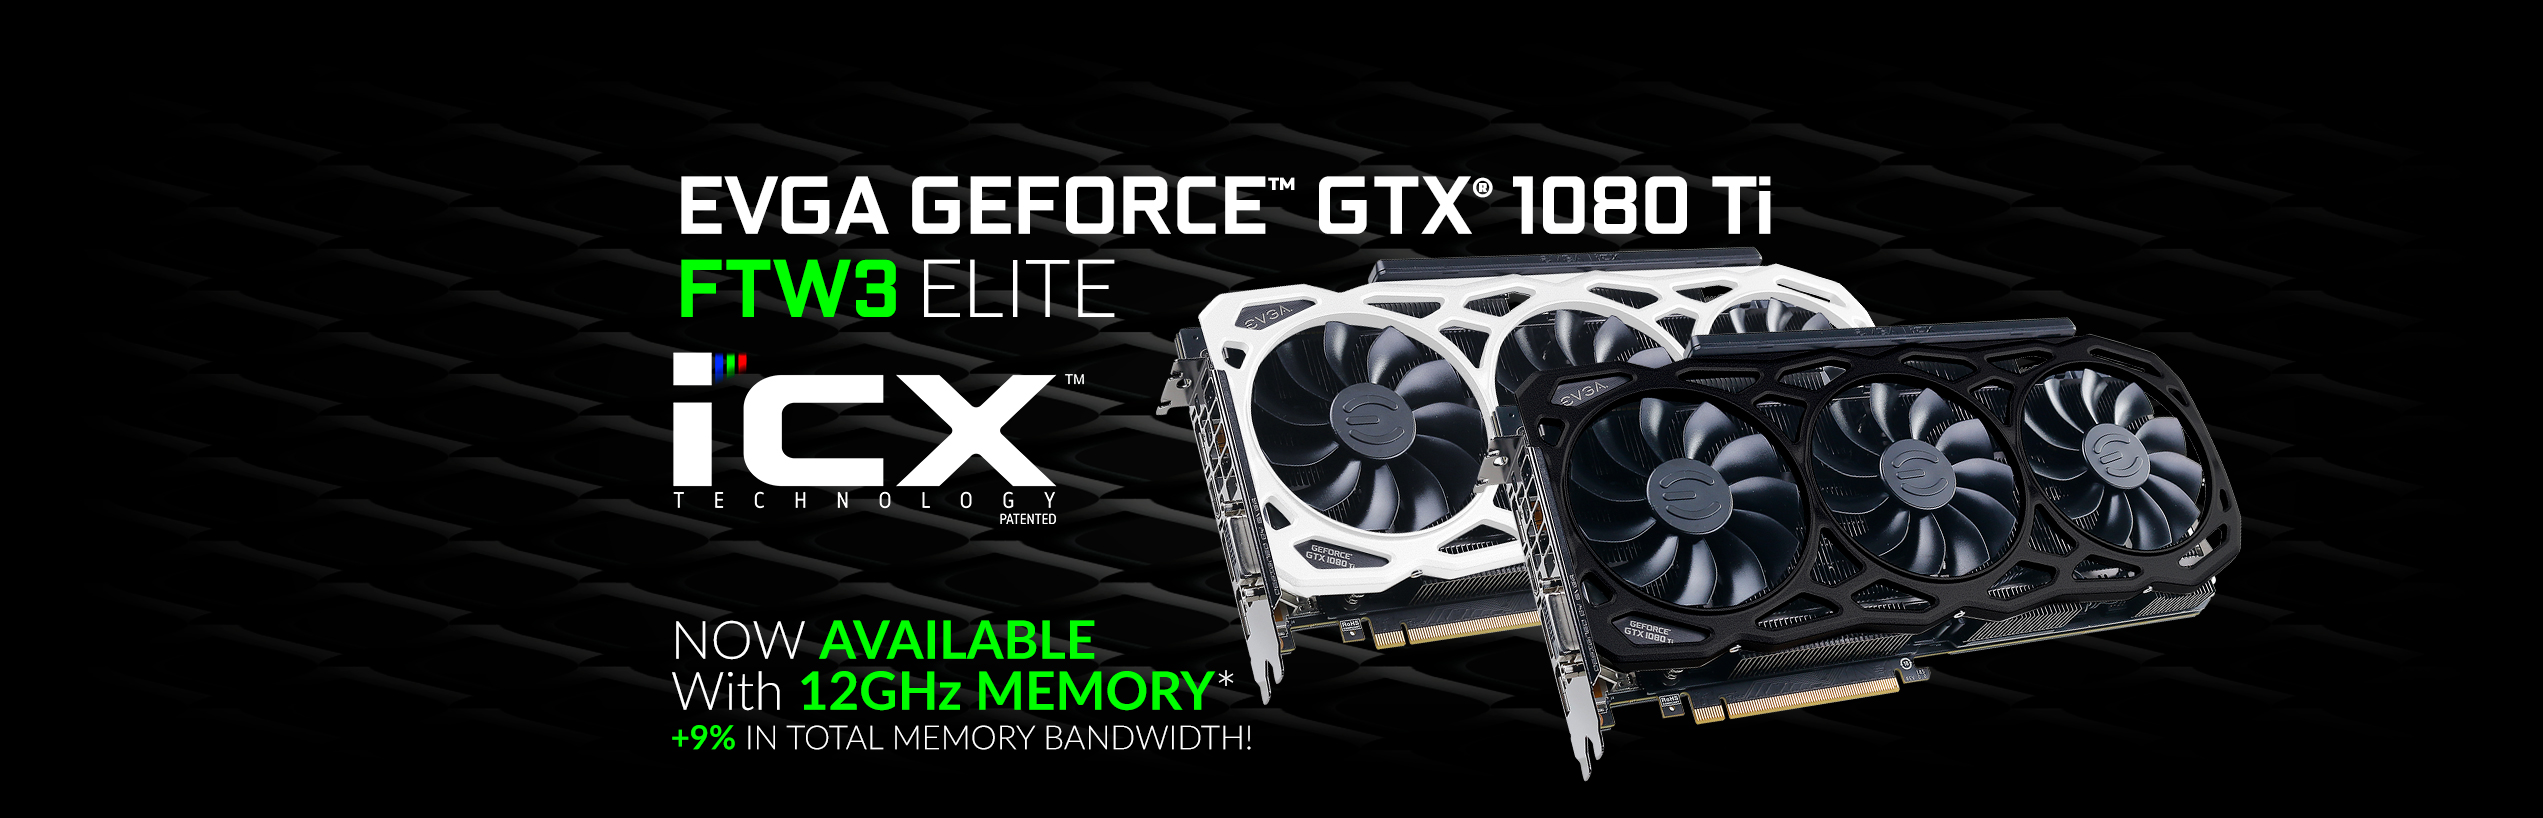 EVGA GeForce GTX 1080 Ti FTW3 ELITE 12GHz